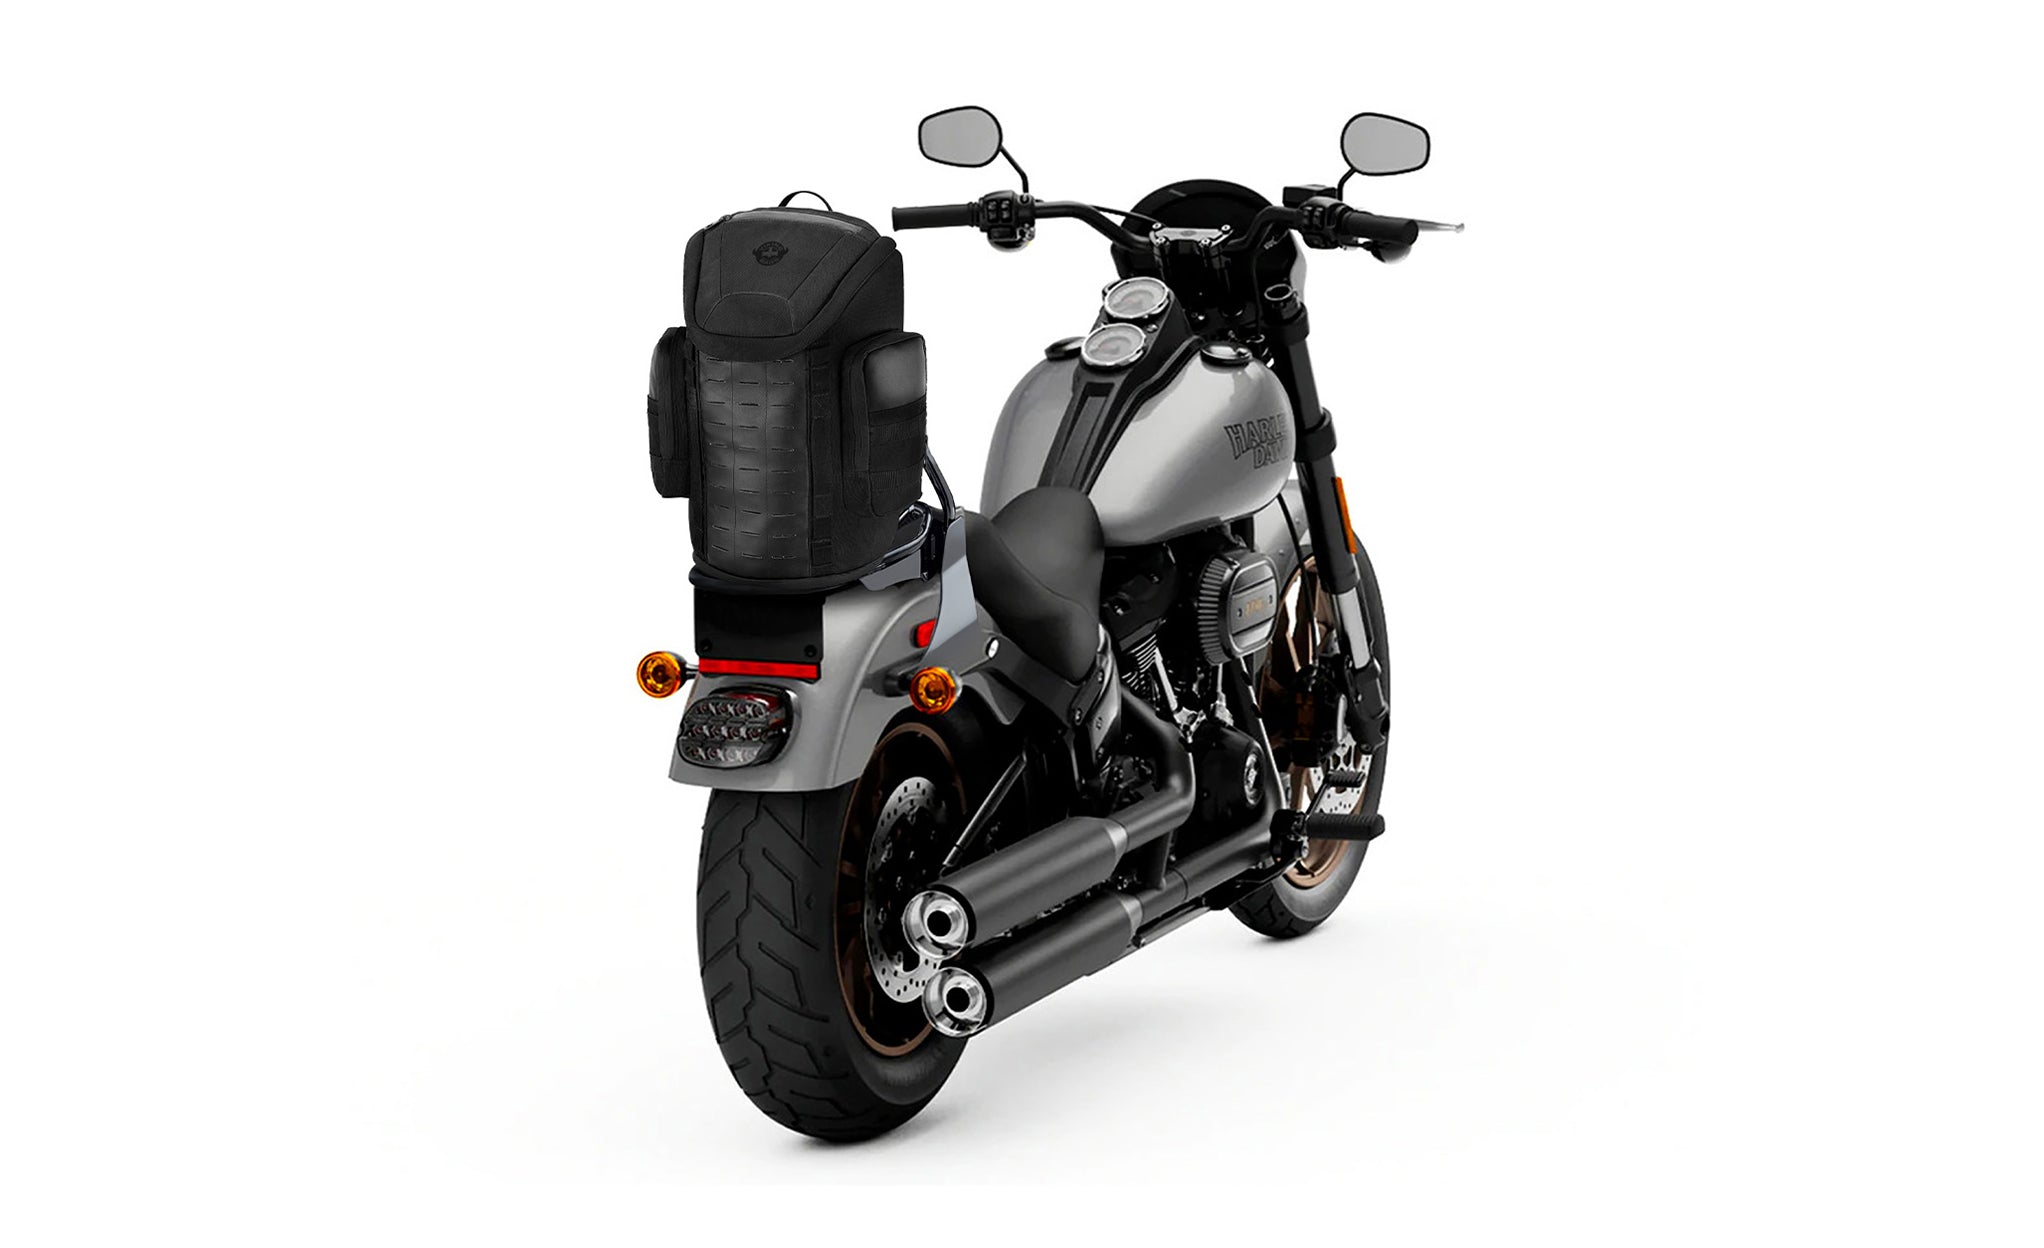 Viking Patriot Medium Motorcycle Sissy Bar Backpack for Harley Davidson Bag on Bike View @expand